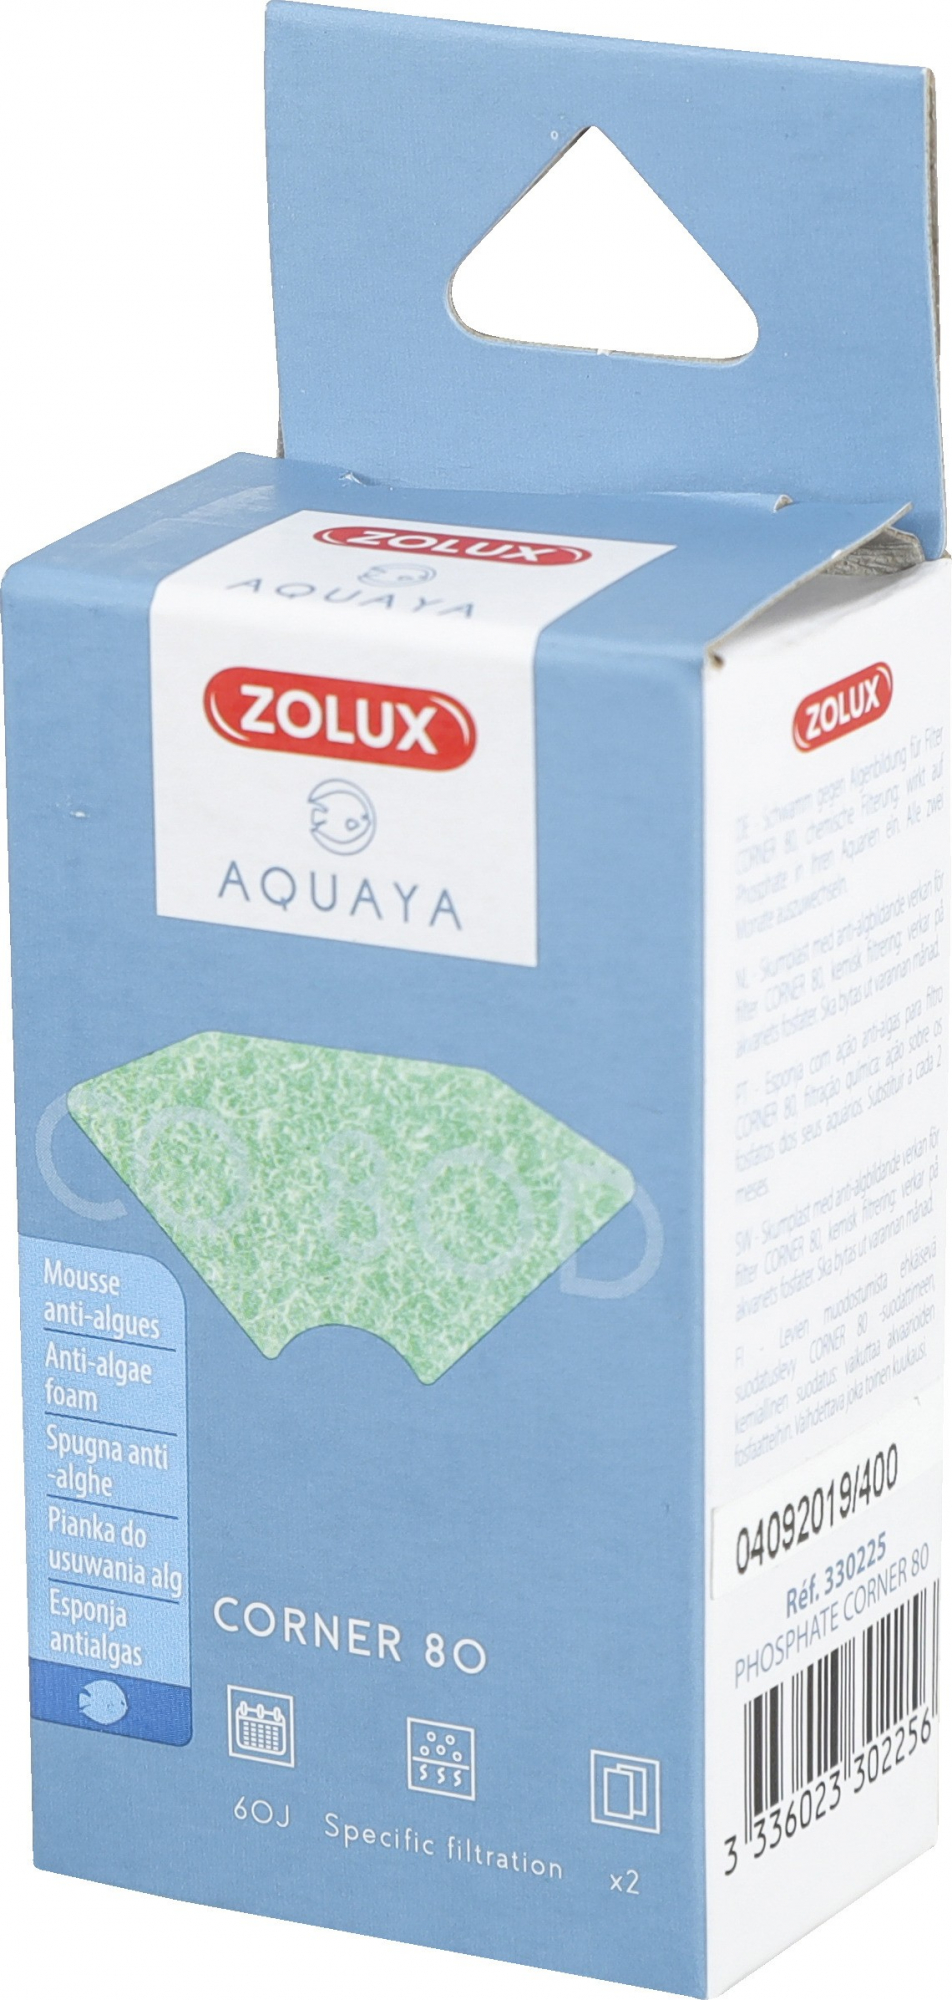 Mousse anti-phosphate pour filtre Corner Aquaya